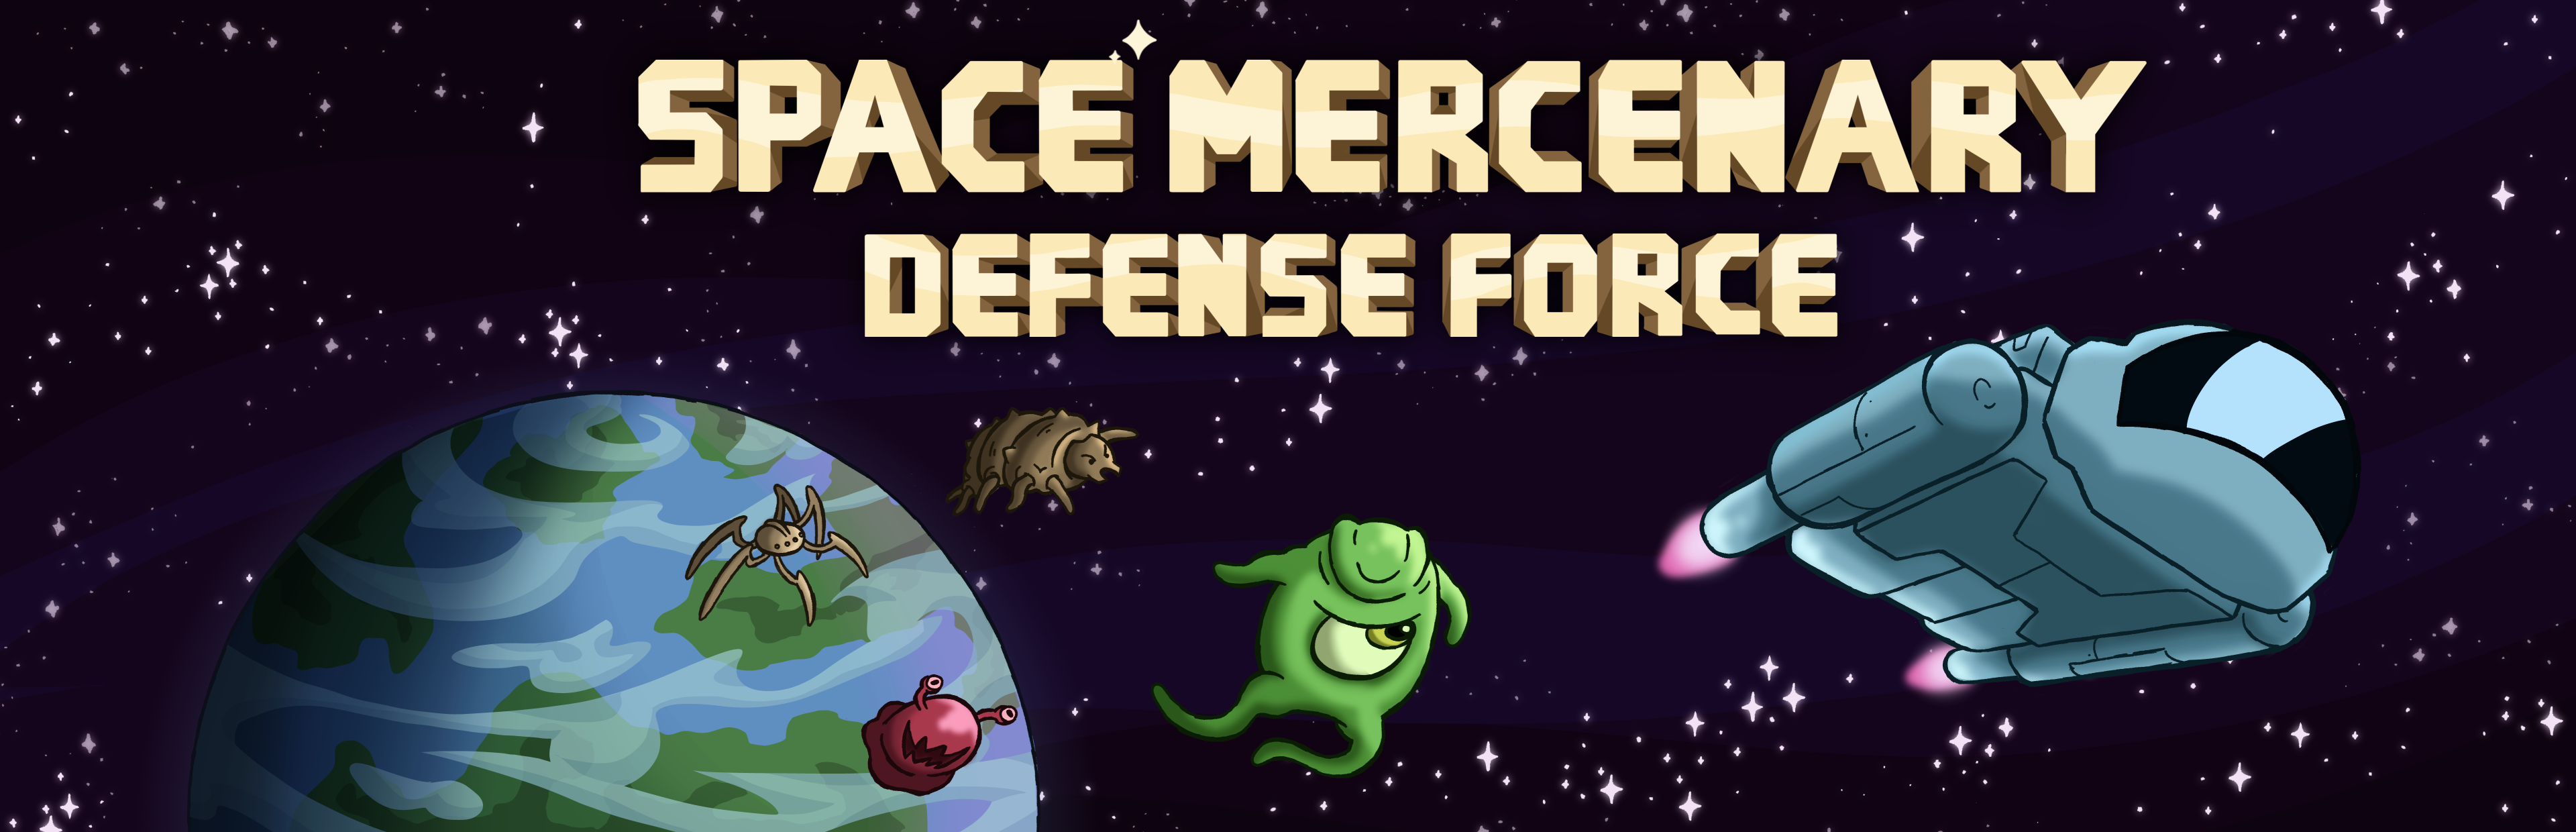 Space Mercenary Defense Force